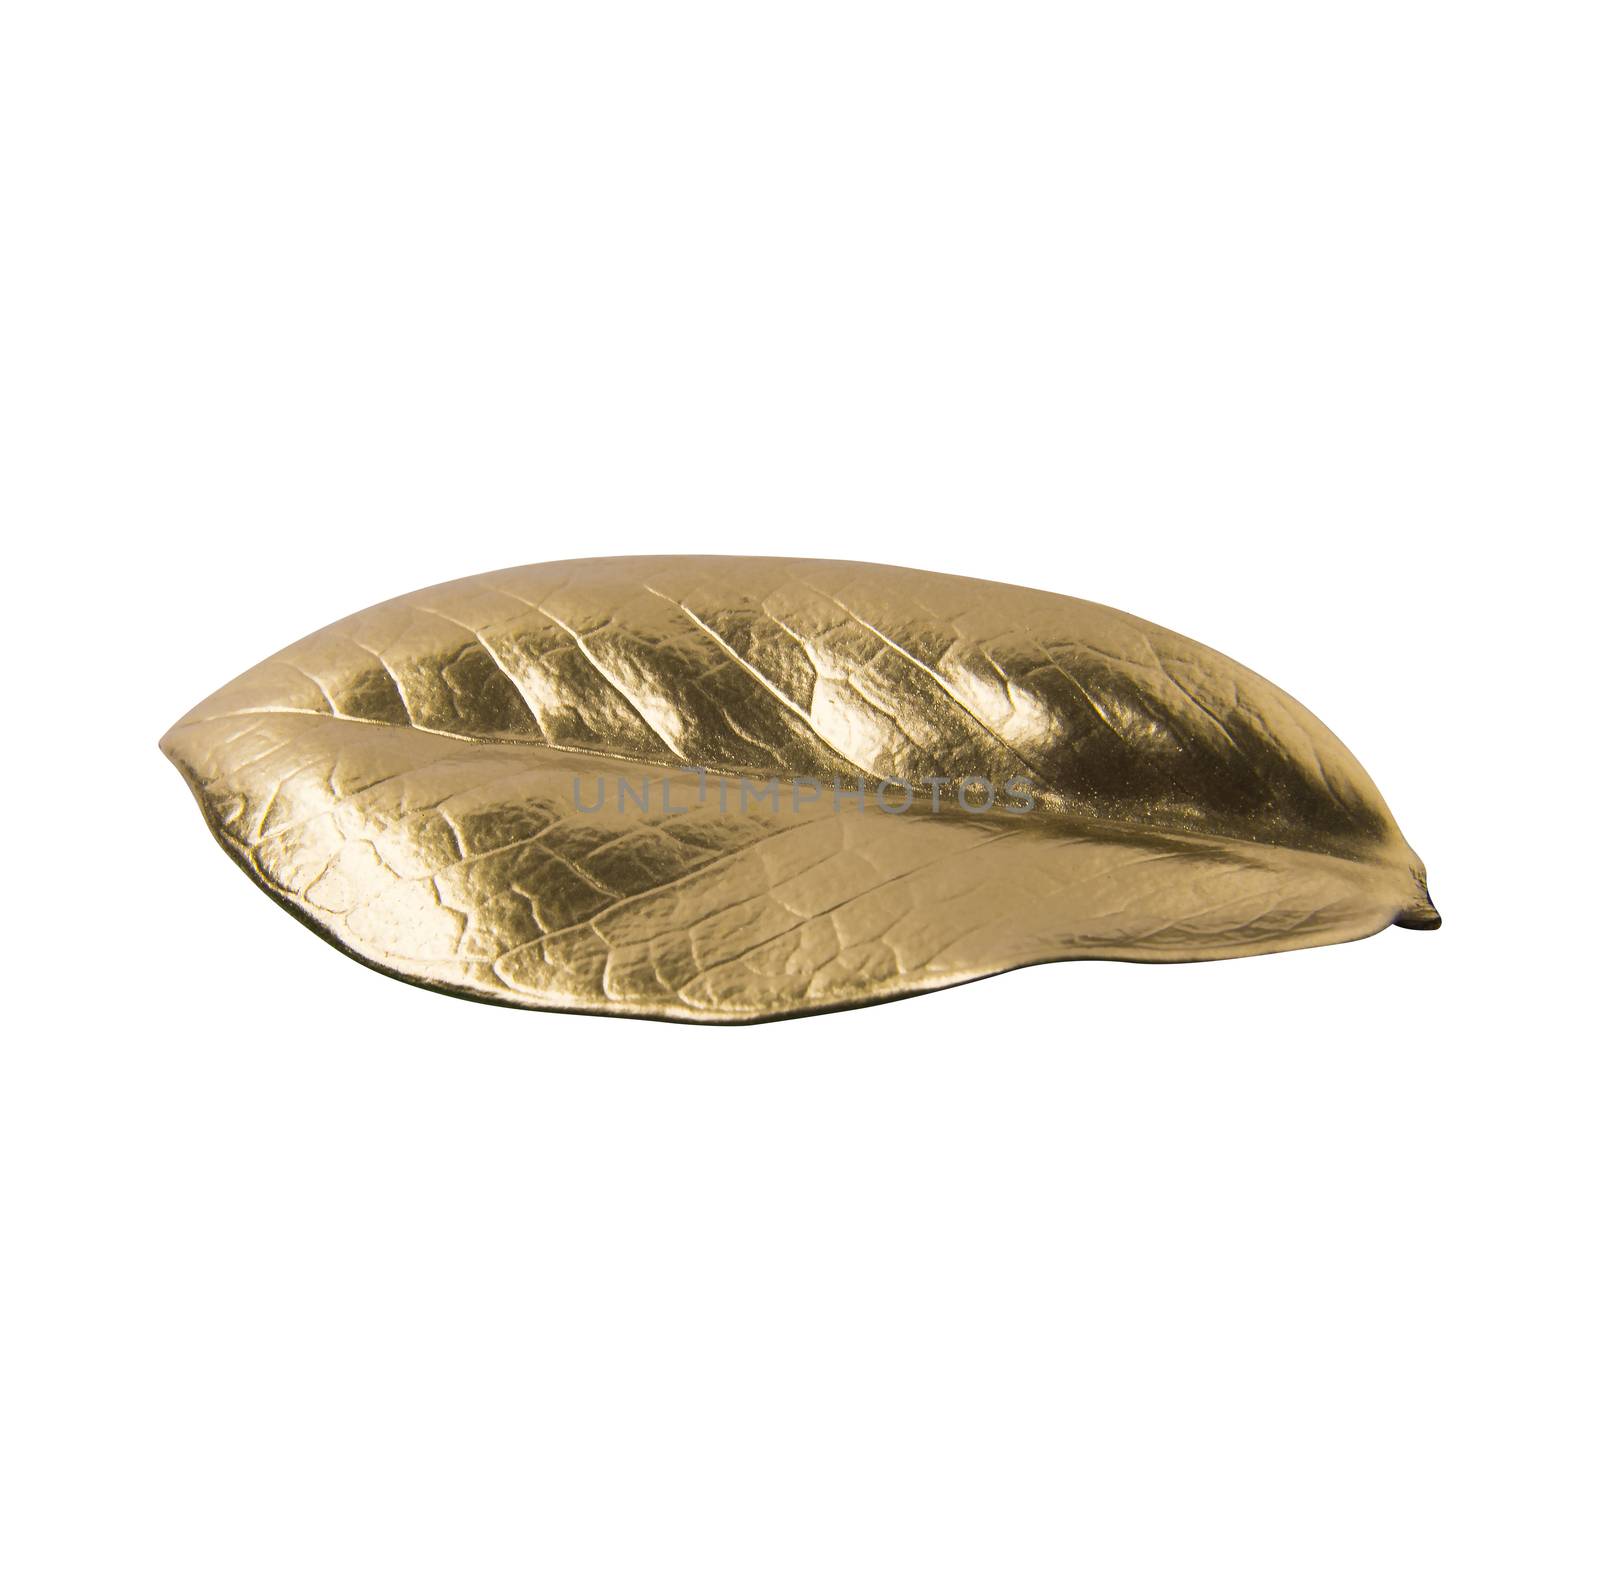 Gold leaf on white background. Decorative element